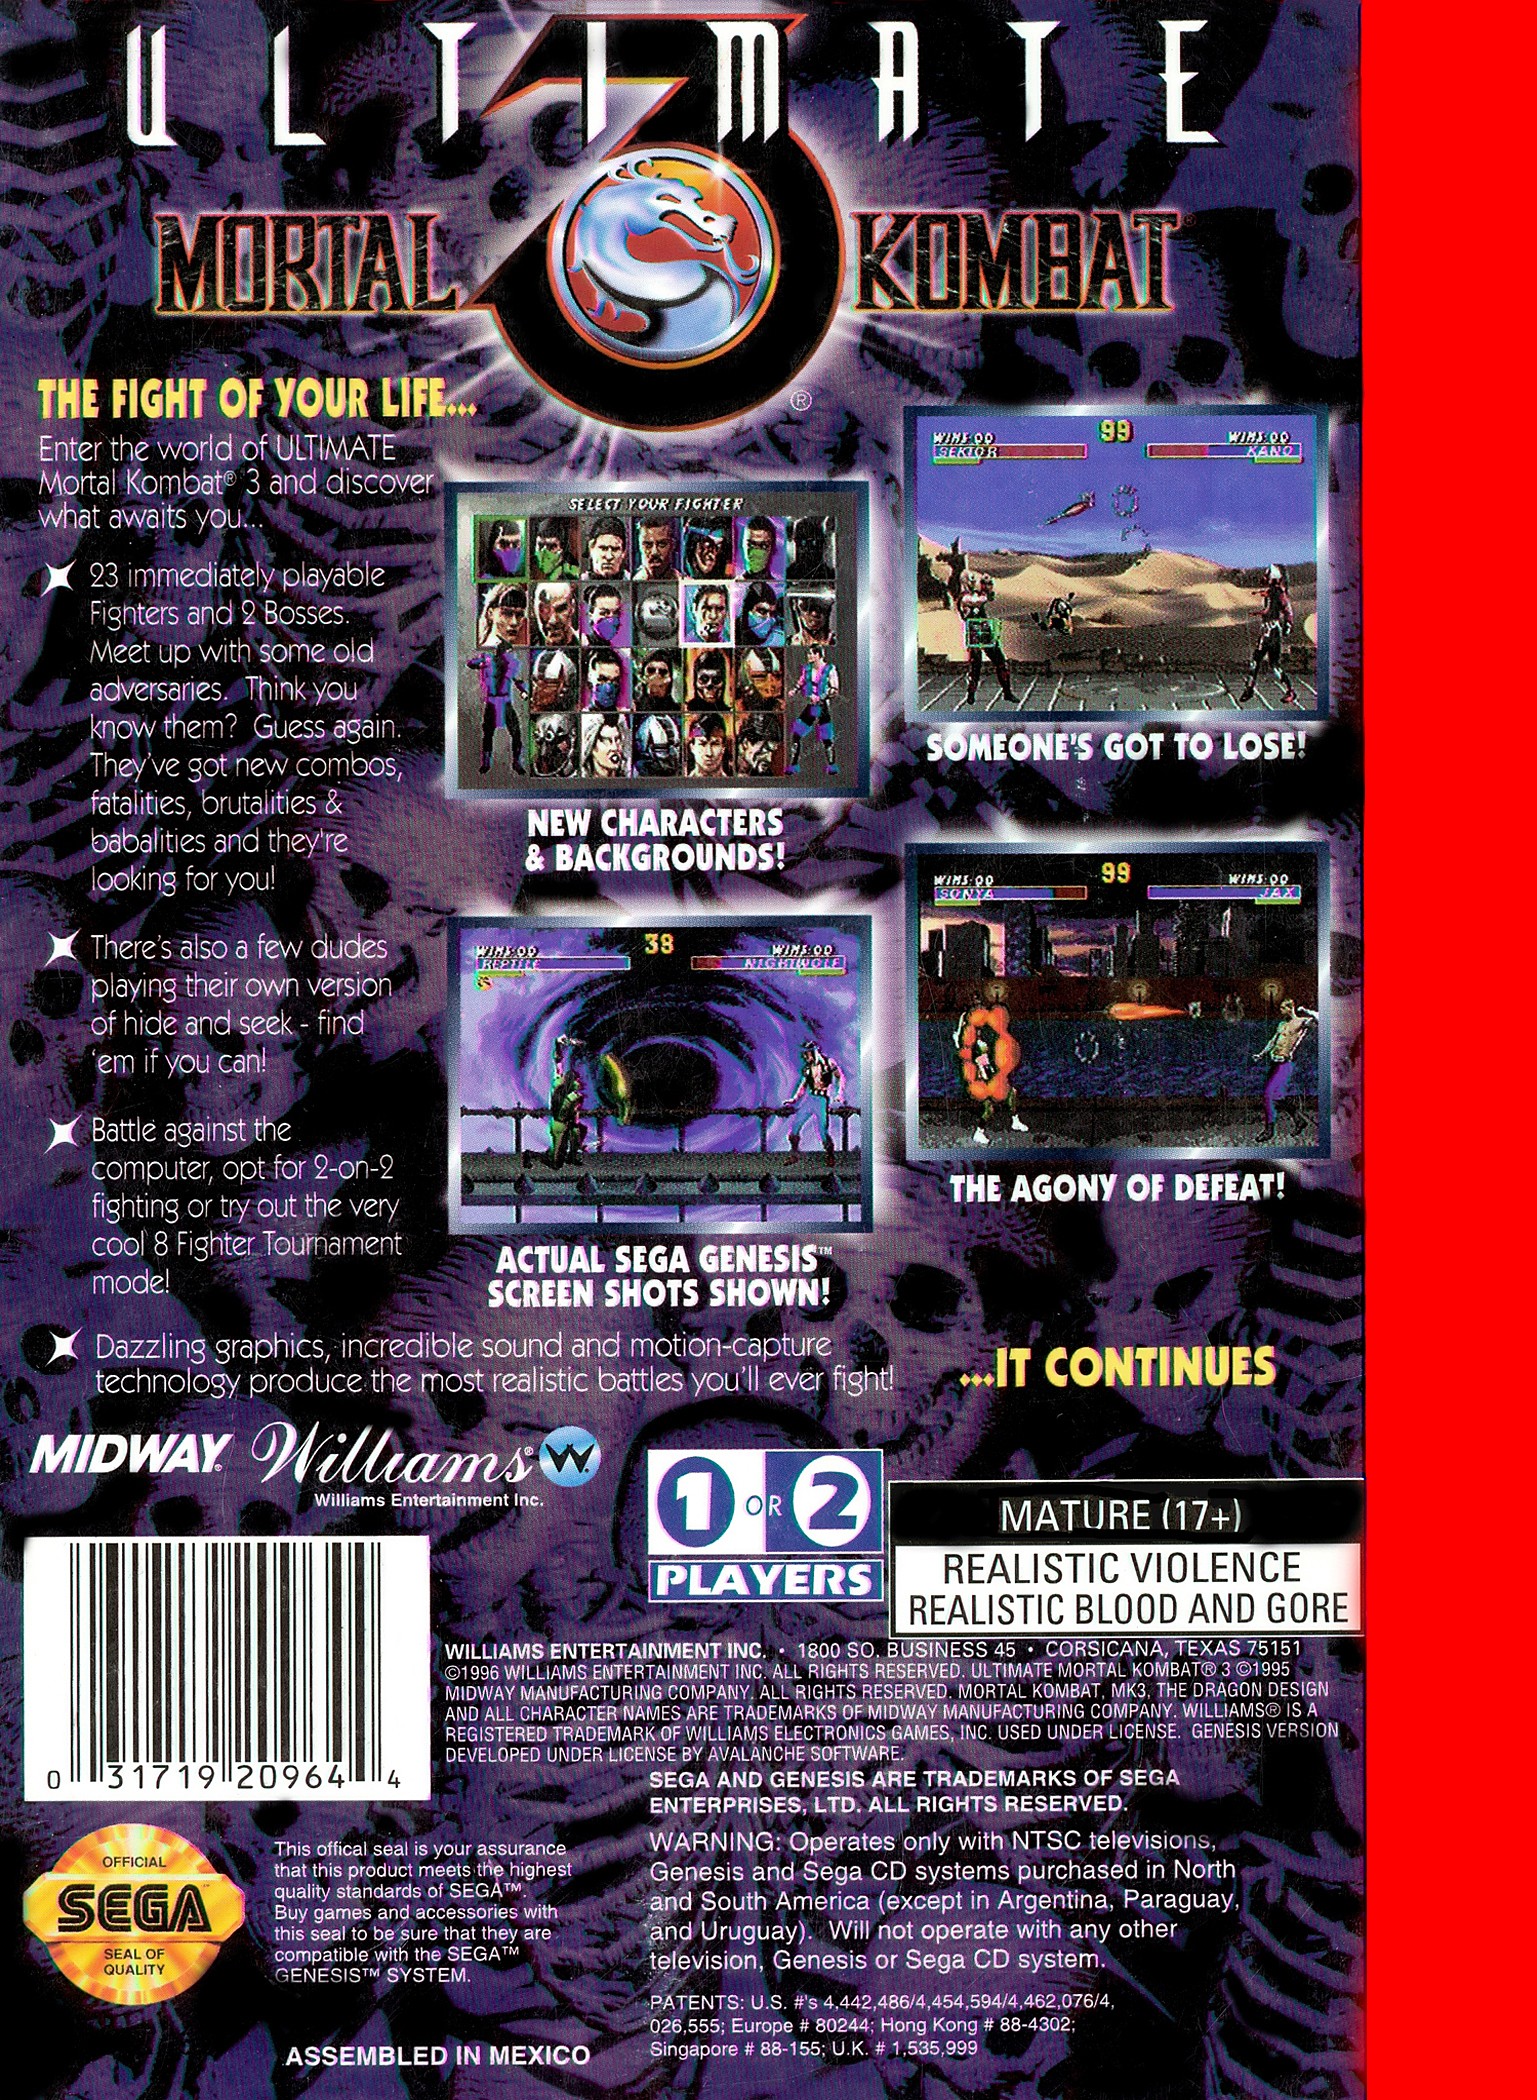 Мортал комбат 3 ultimate. Ultimate Mortal Kombat 3. Mortal Kombat 3 Ultimate Sega. Mortal Kombat Ultimate Sega обложка. Mortal Kombat 3 Ultimate сега.